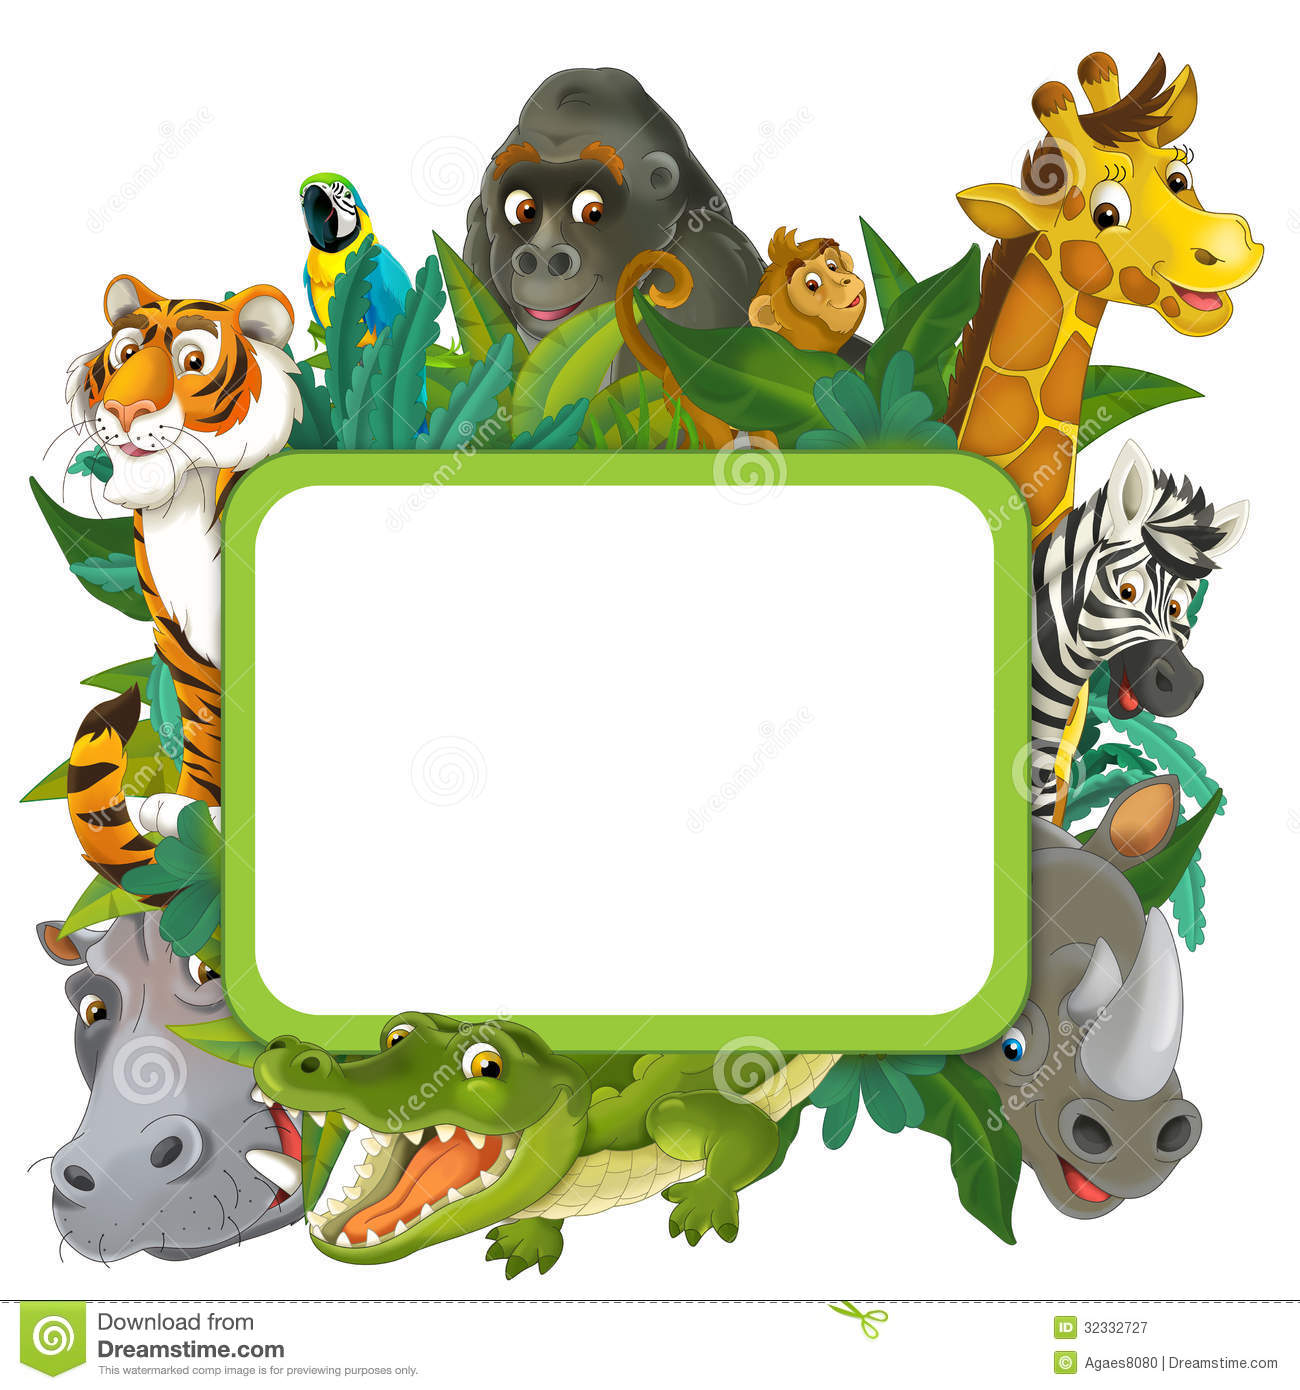 Banner   Frame   Border   Jungle Safari Theme   Illustration For The